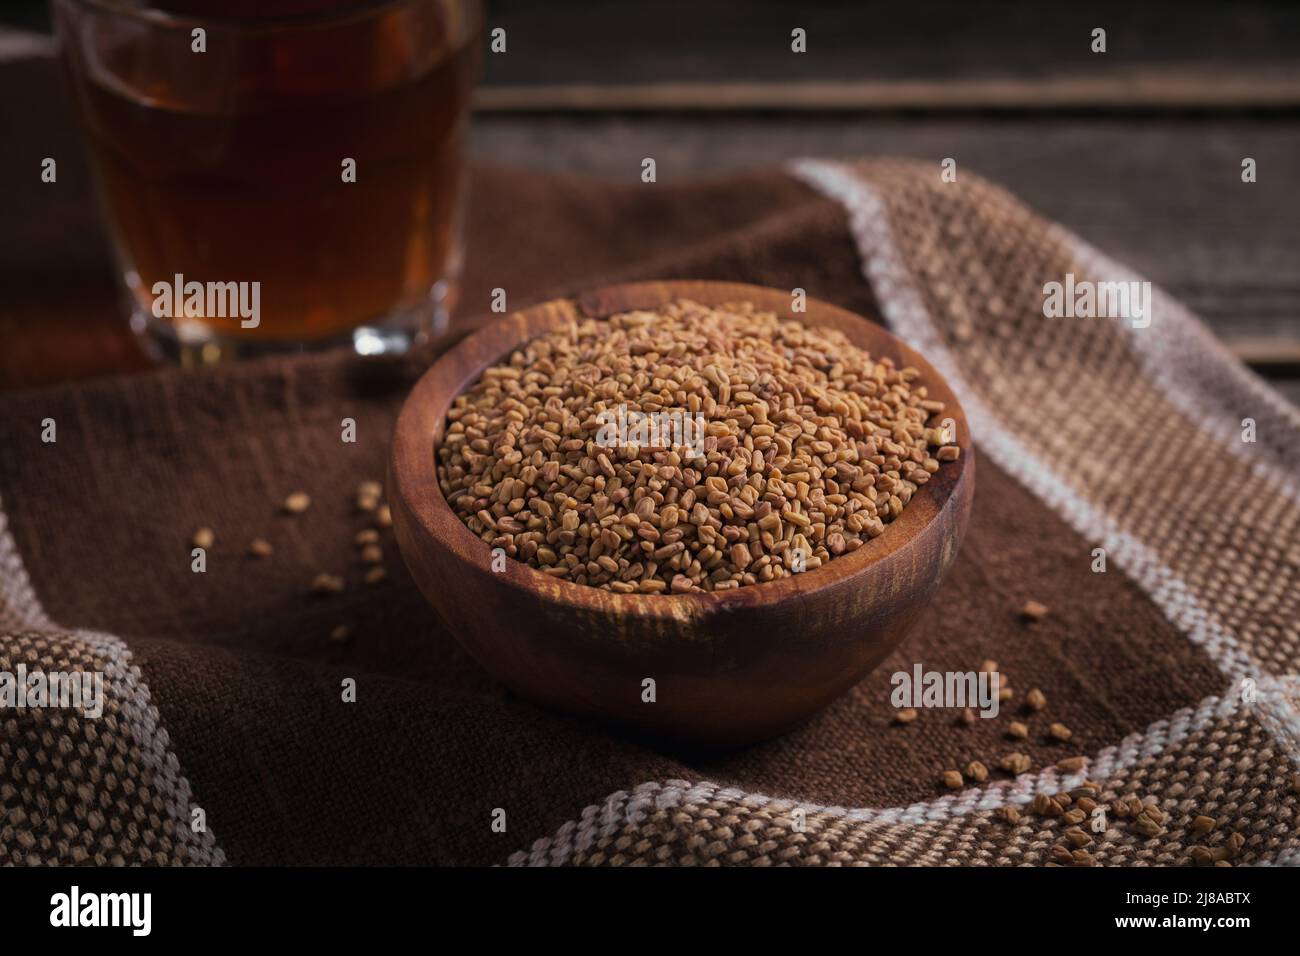 Bowl of fenugreek seeds and Egyptian fenugreek yellow tea or Methi Dana drink Stock Photo